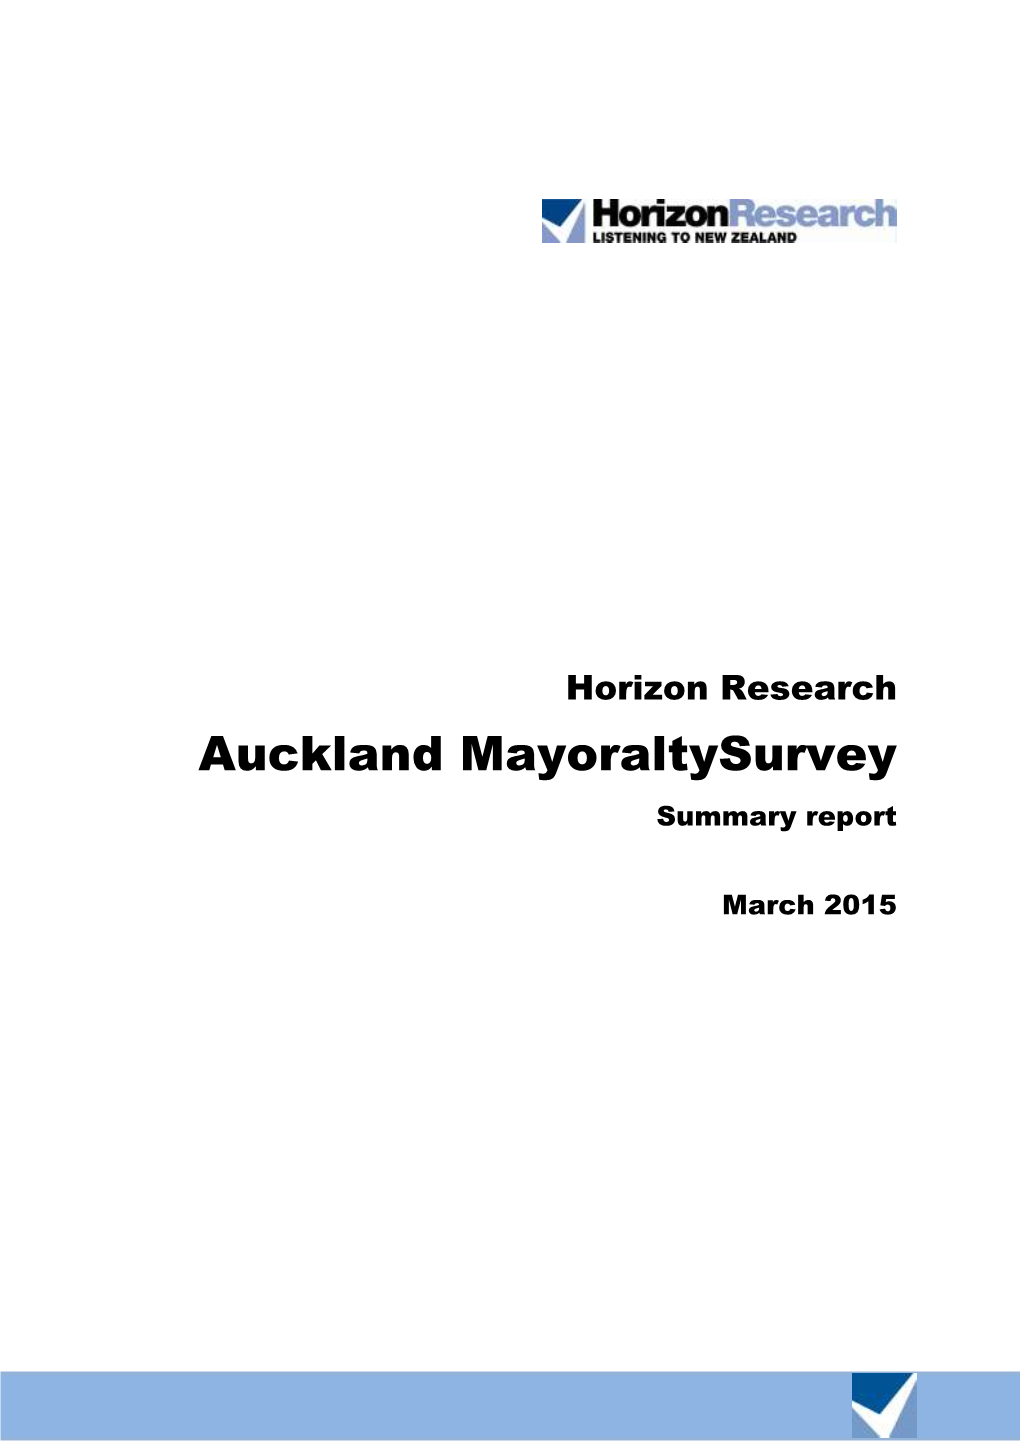 Auckland Mayoraltysurvey Summary Report